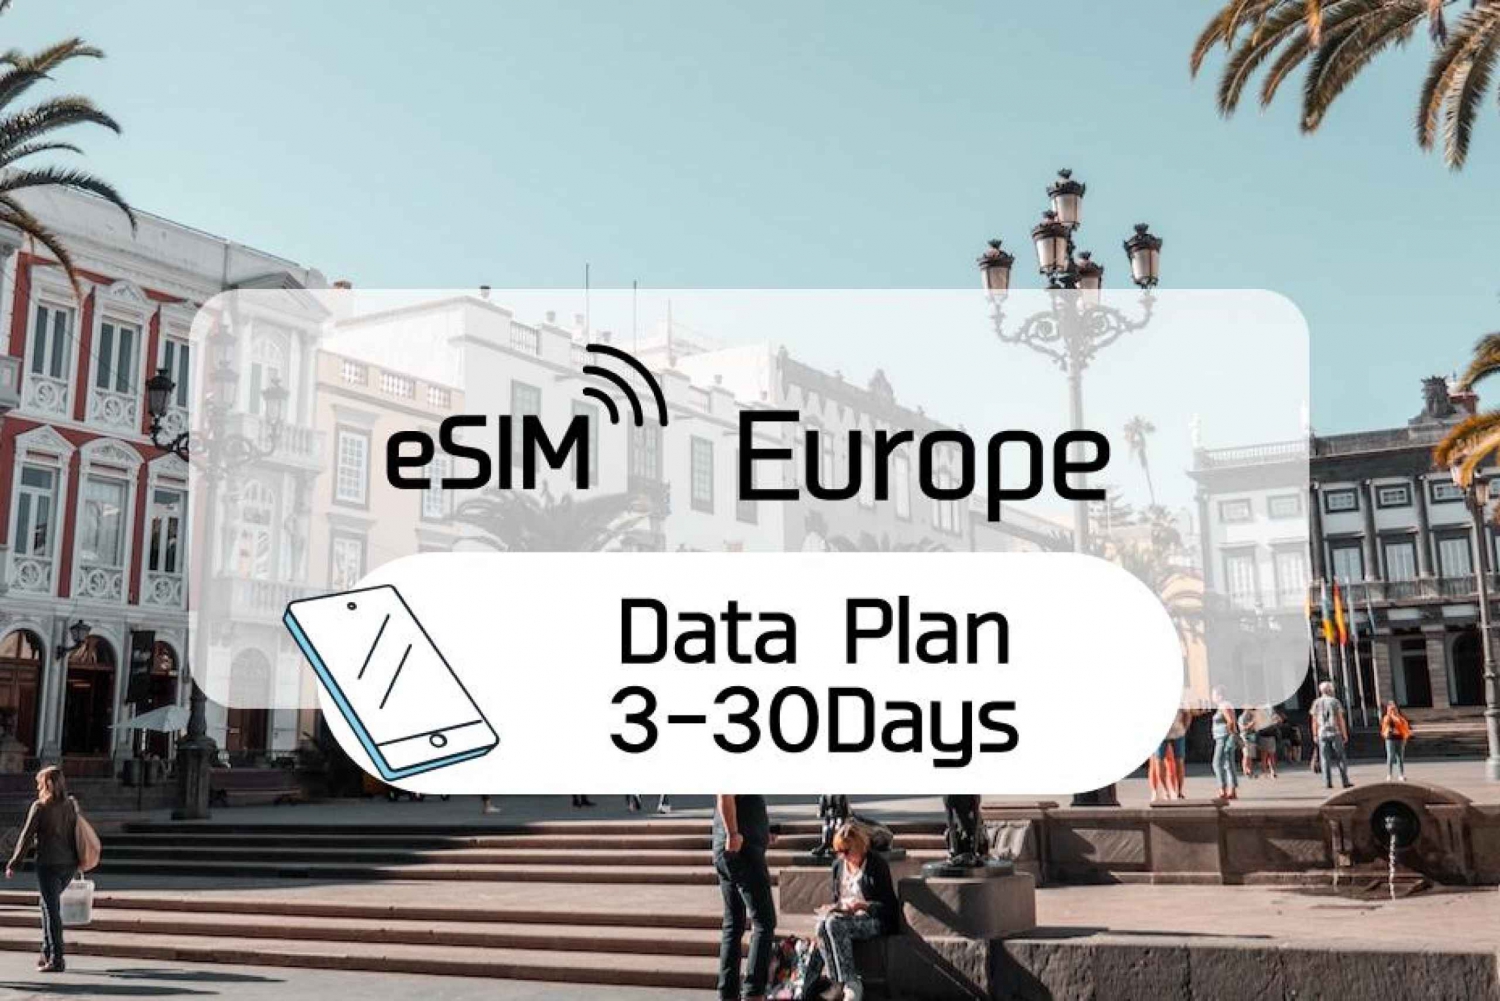 Europa: 5G eSim Roaming Data Plan (0,5-2GB/dag)